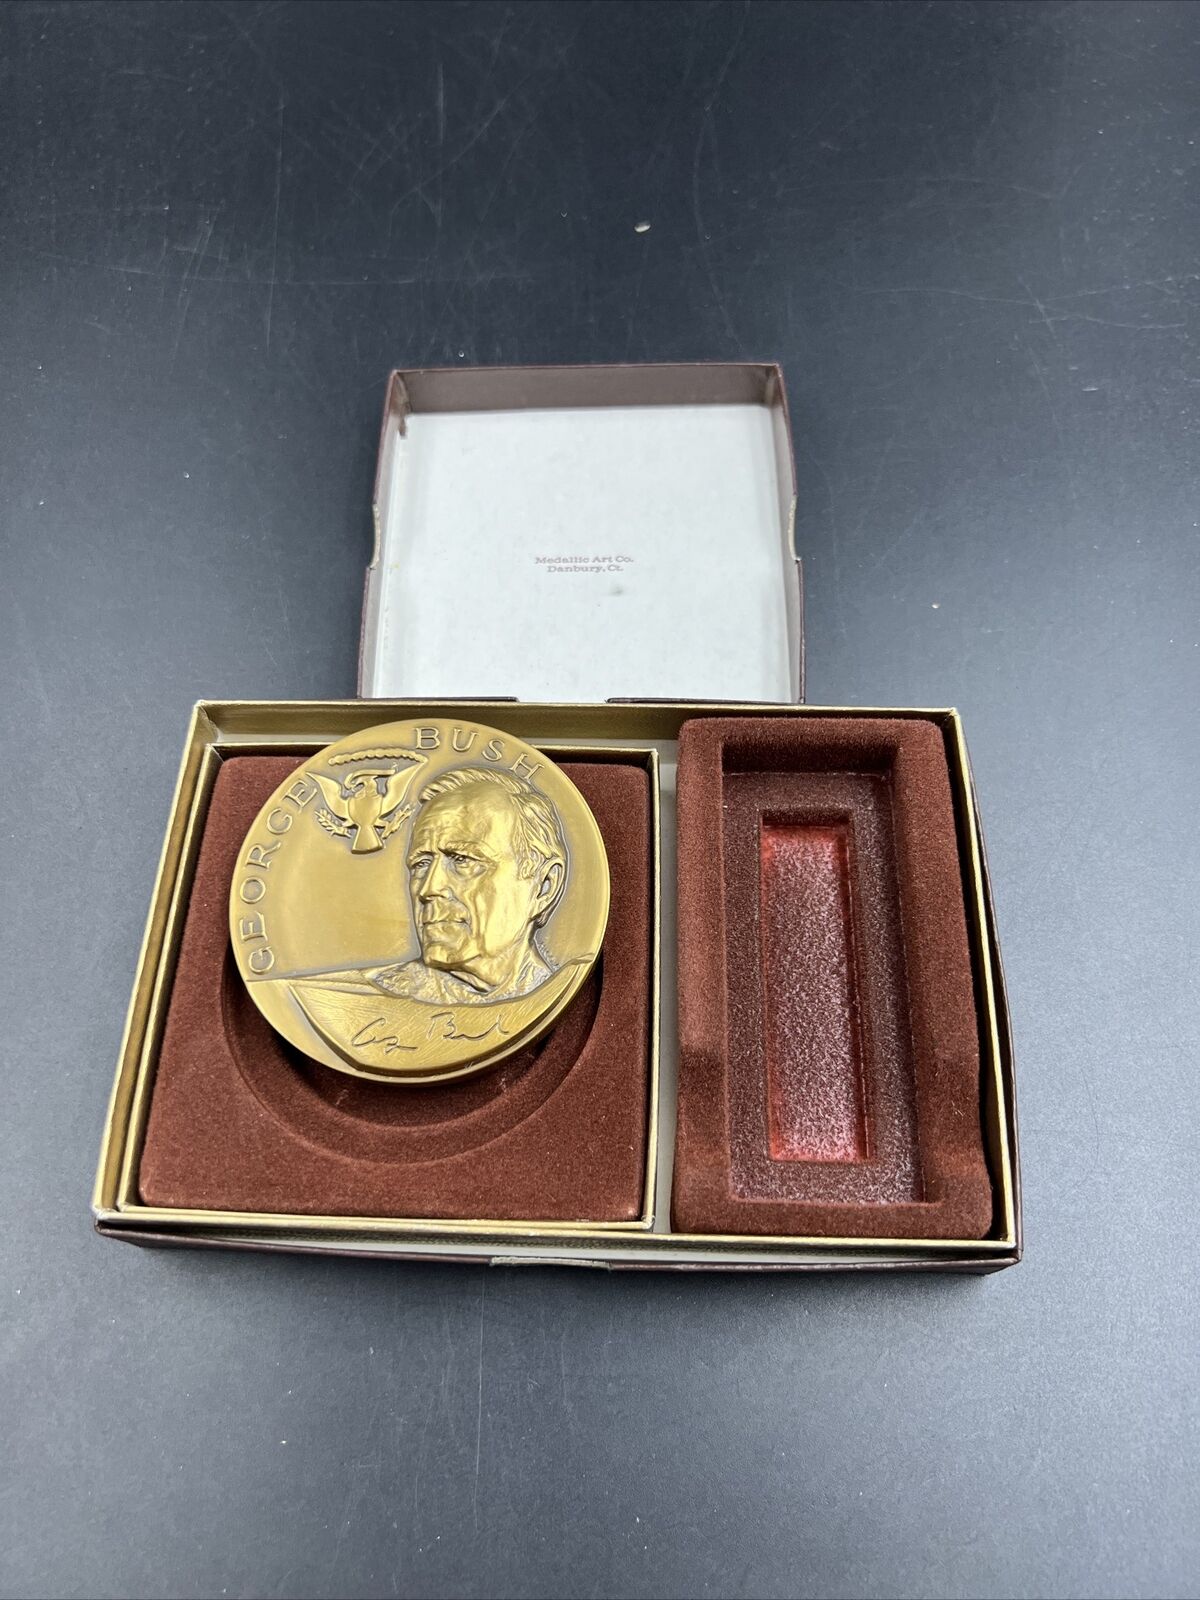 Medallic Art Co 1989 George H.W. Bush Inaugural Bronze Medal in Original Box